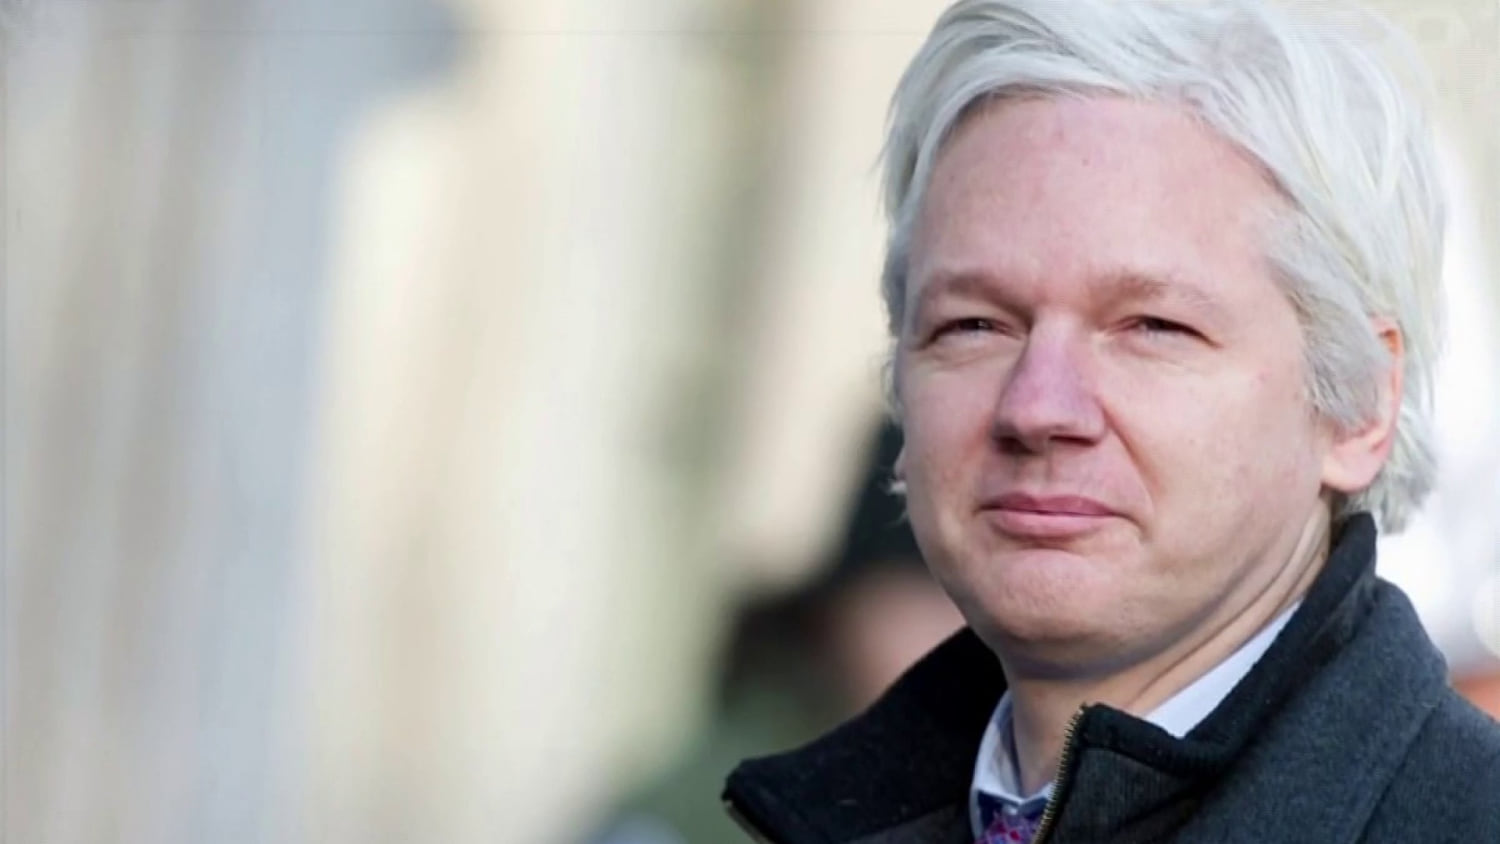 President Biden considers dropping Julian Assange prosecution